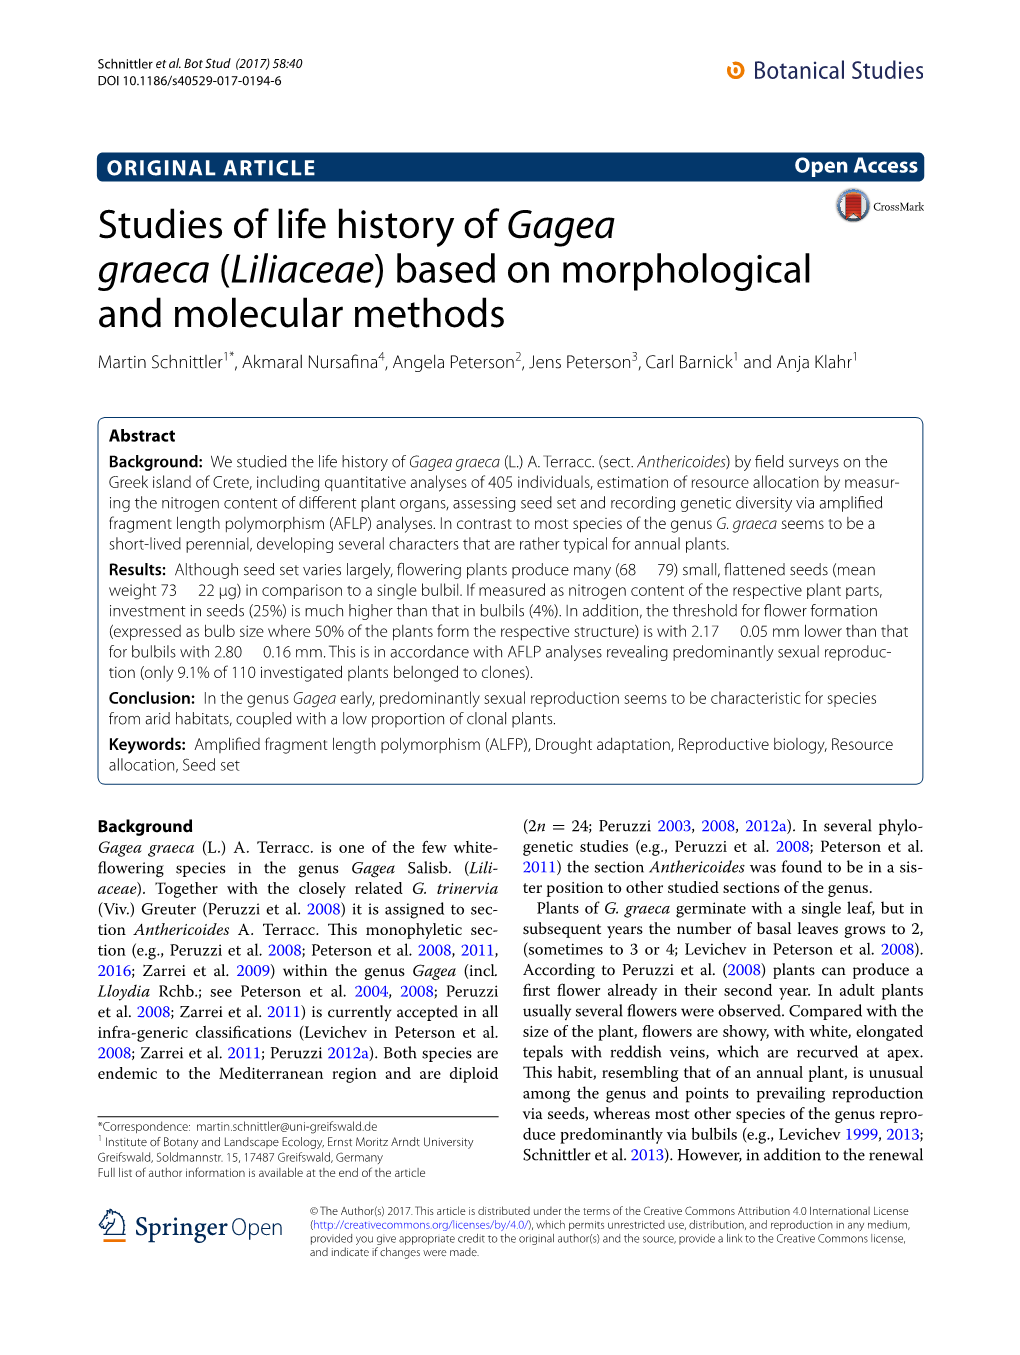 Studies of Life History of Gagea Graeca (Liliaceae) Based on Morphological